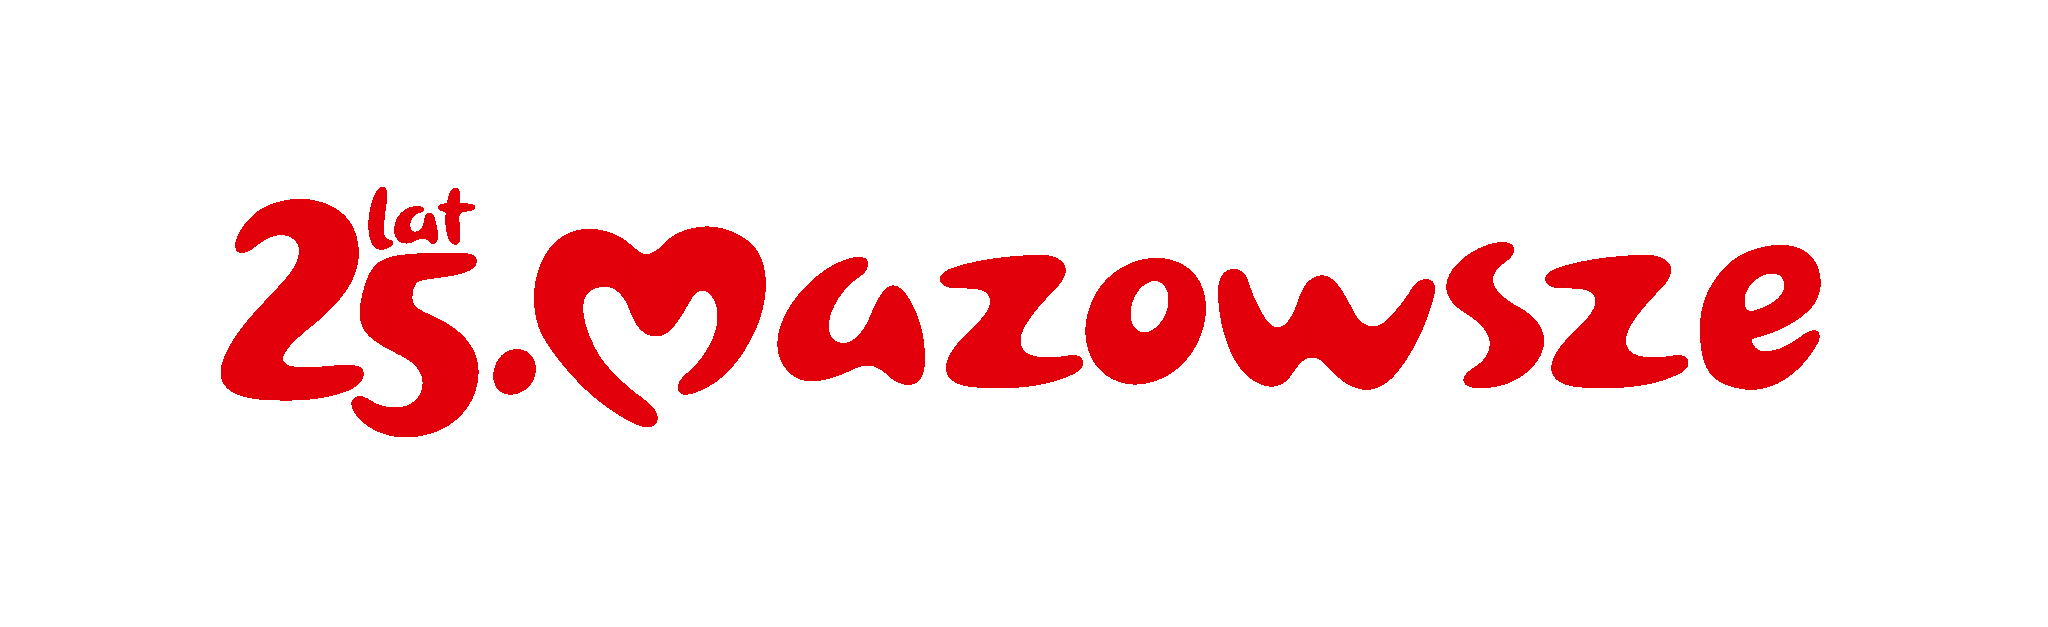 logo_mazowsze_25lat